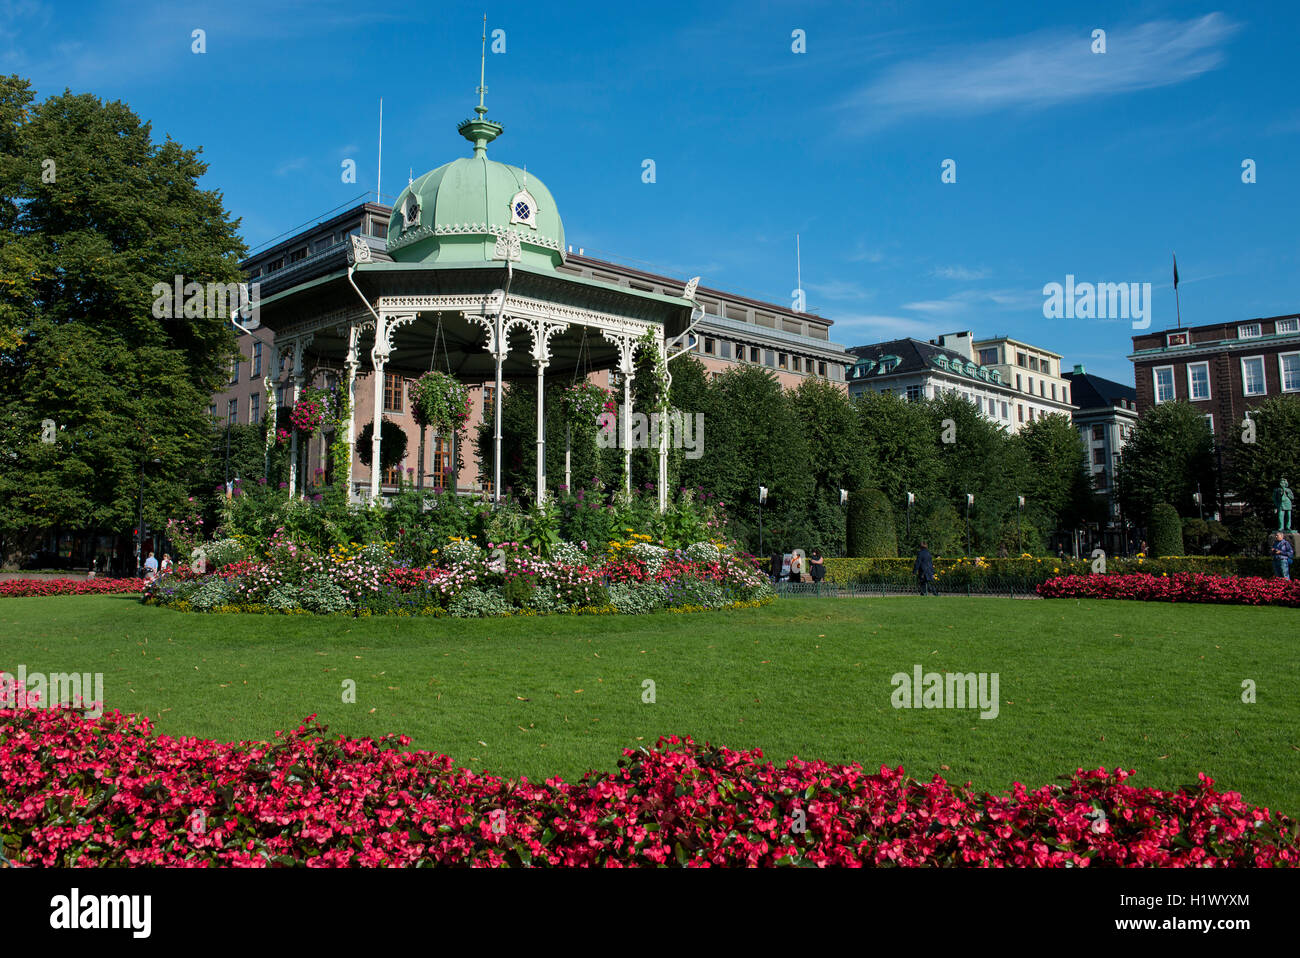 Norway, Bergen, UNECSO World Heritage City. Downtown park with garden gazebo. Stock Photo